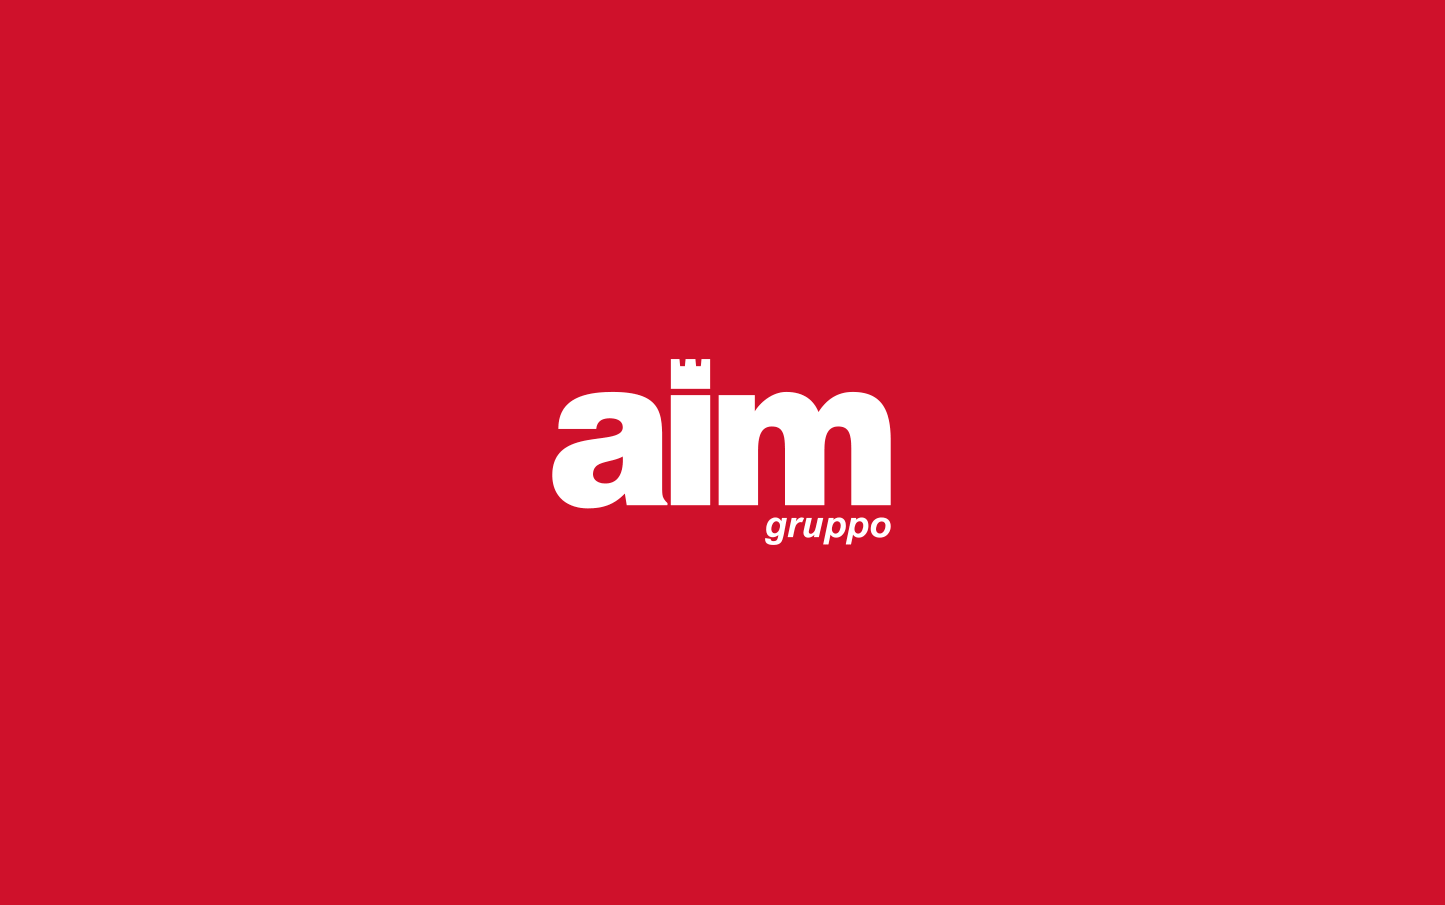 AIM brand identity